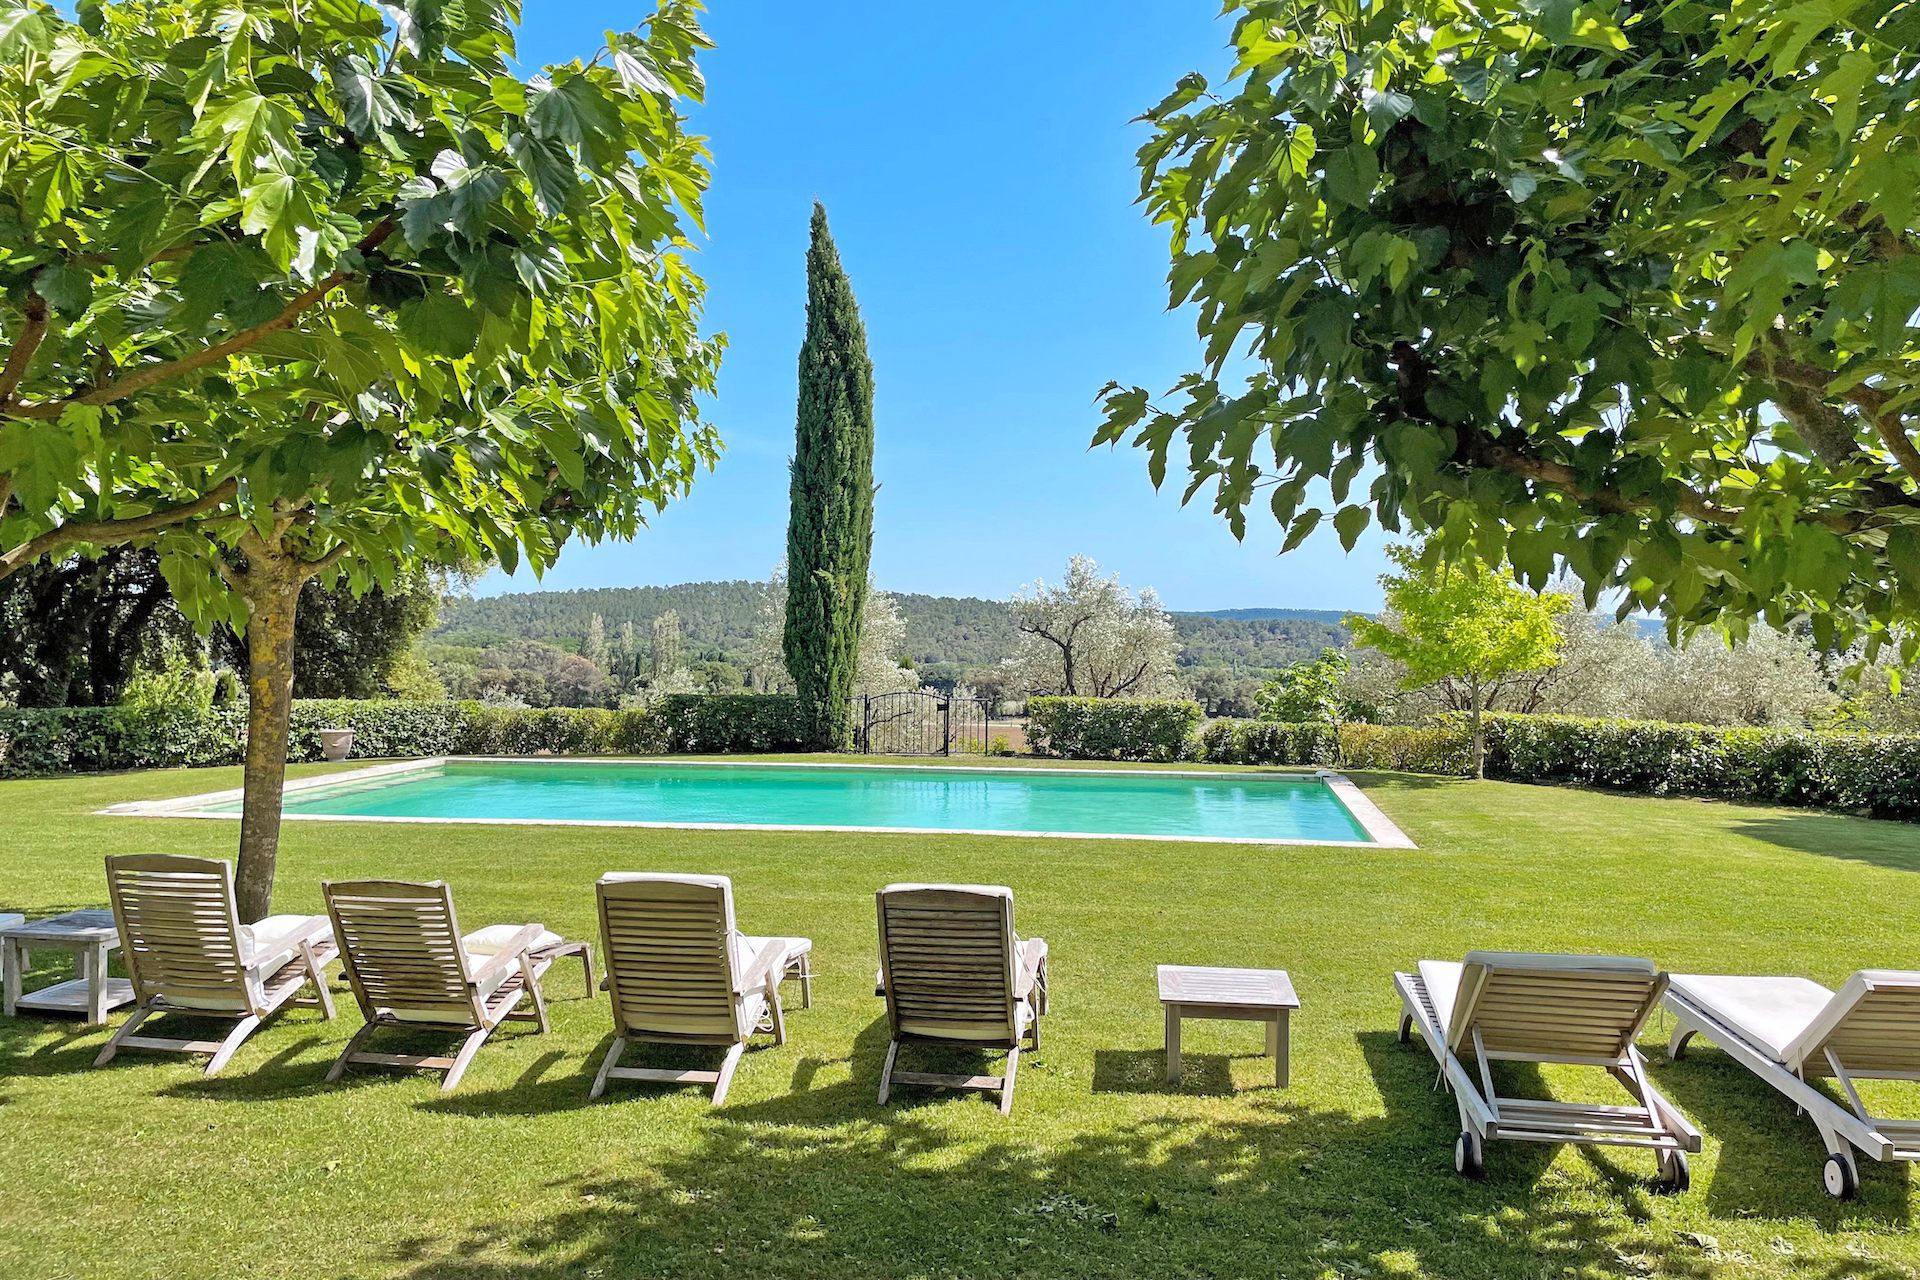 Méditerranée Location Bastide with Private pool in Bollène, Provence